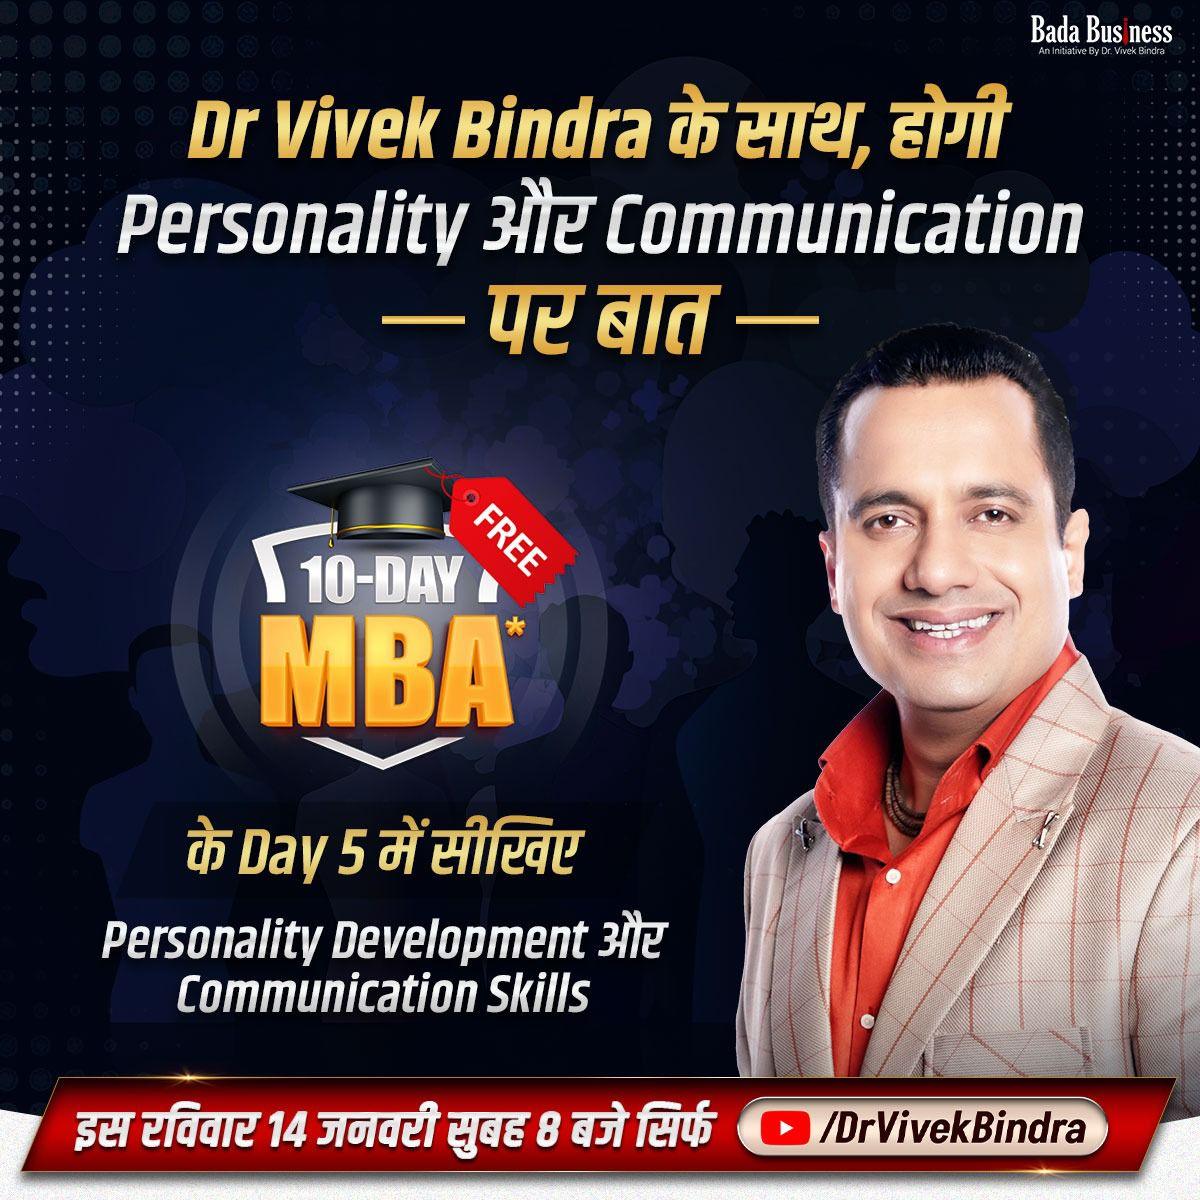 Bada business   Founder. CO Dr. Vivek Bindra India's largest motivation speaker